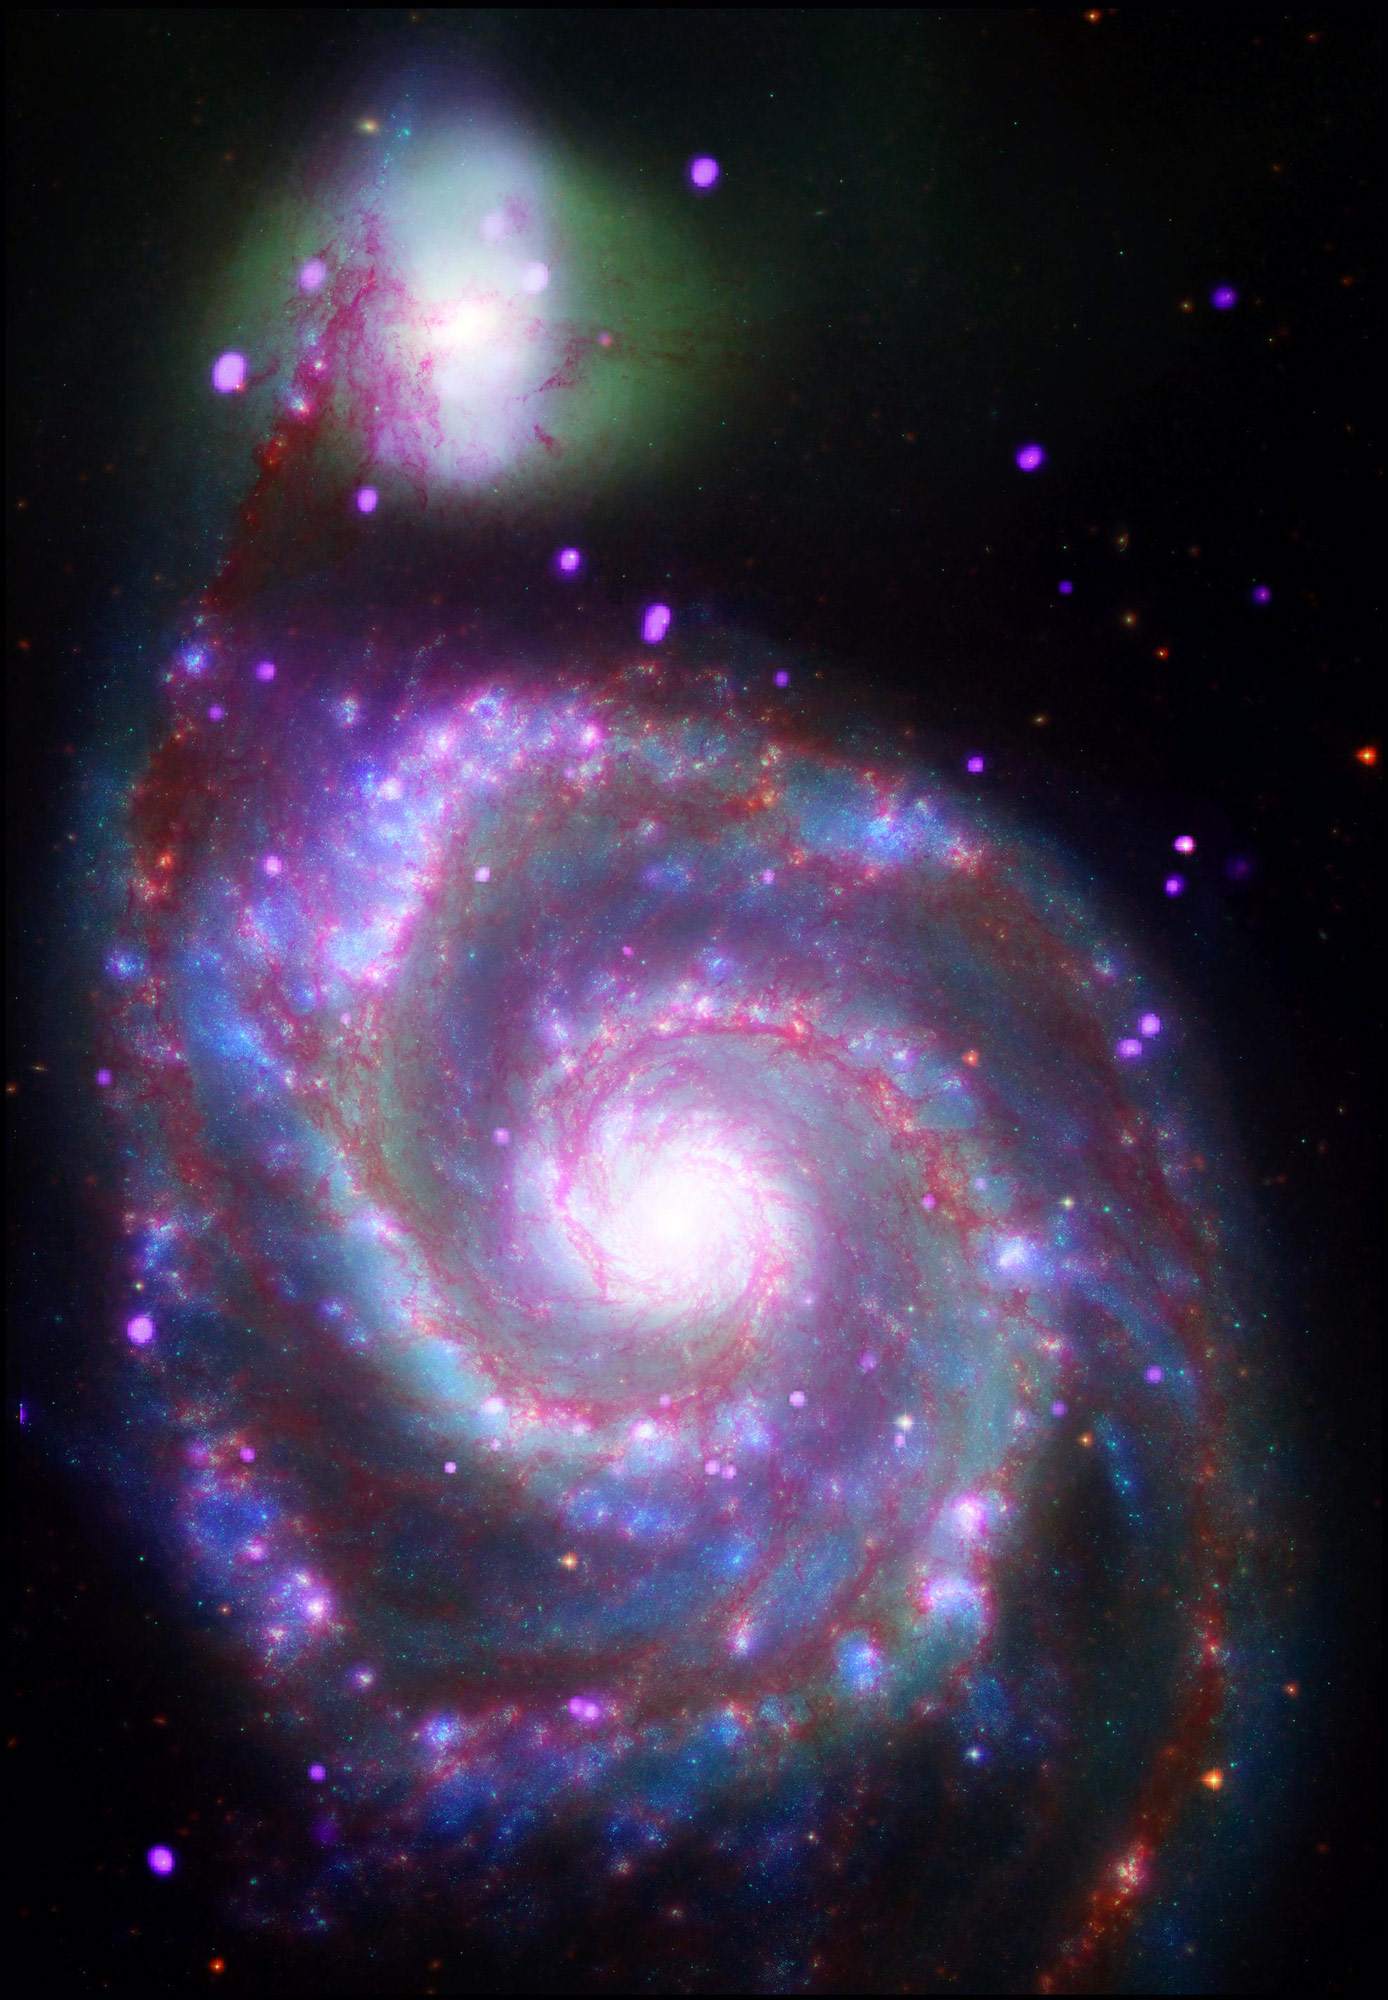 The Whirlpool Galaxy Spiral M51